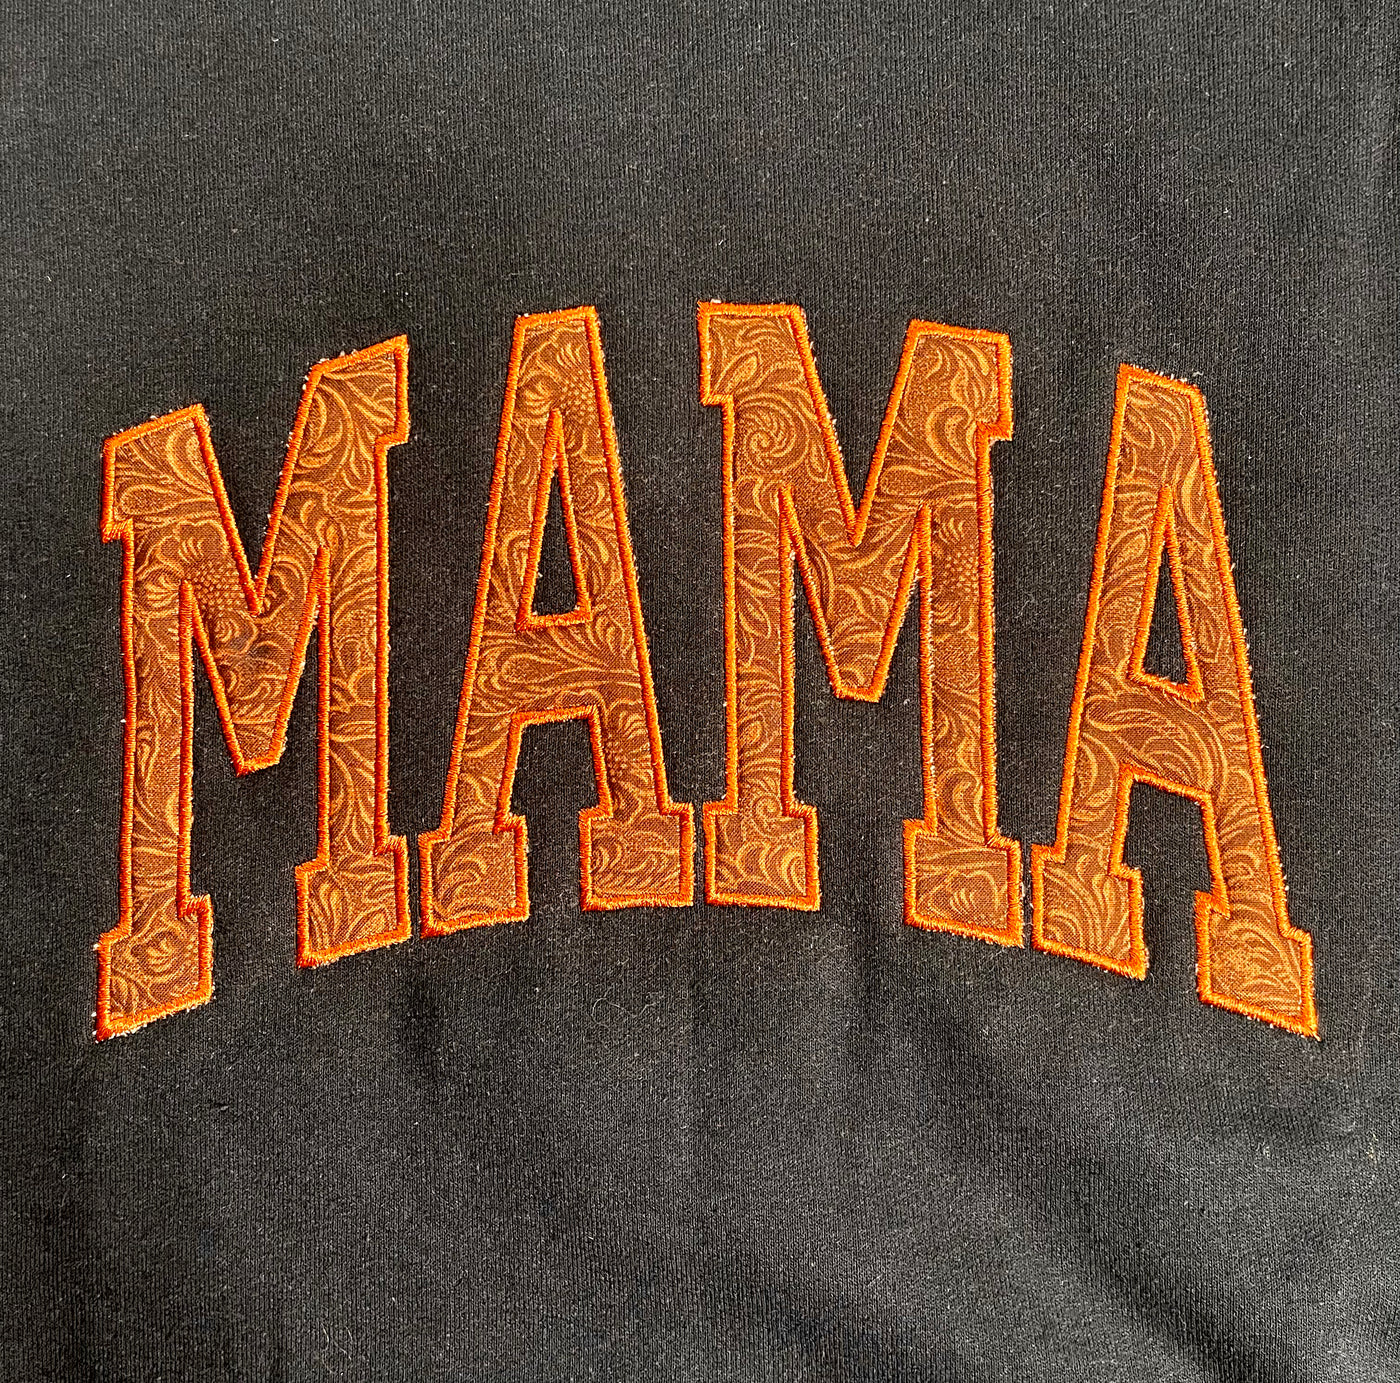 Tooled MAMA Sweatshirt